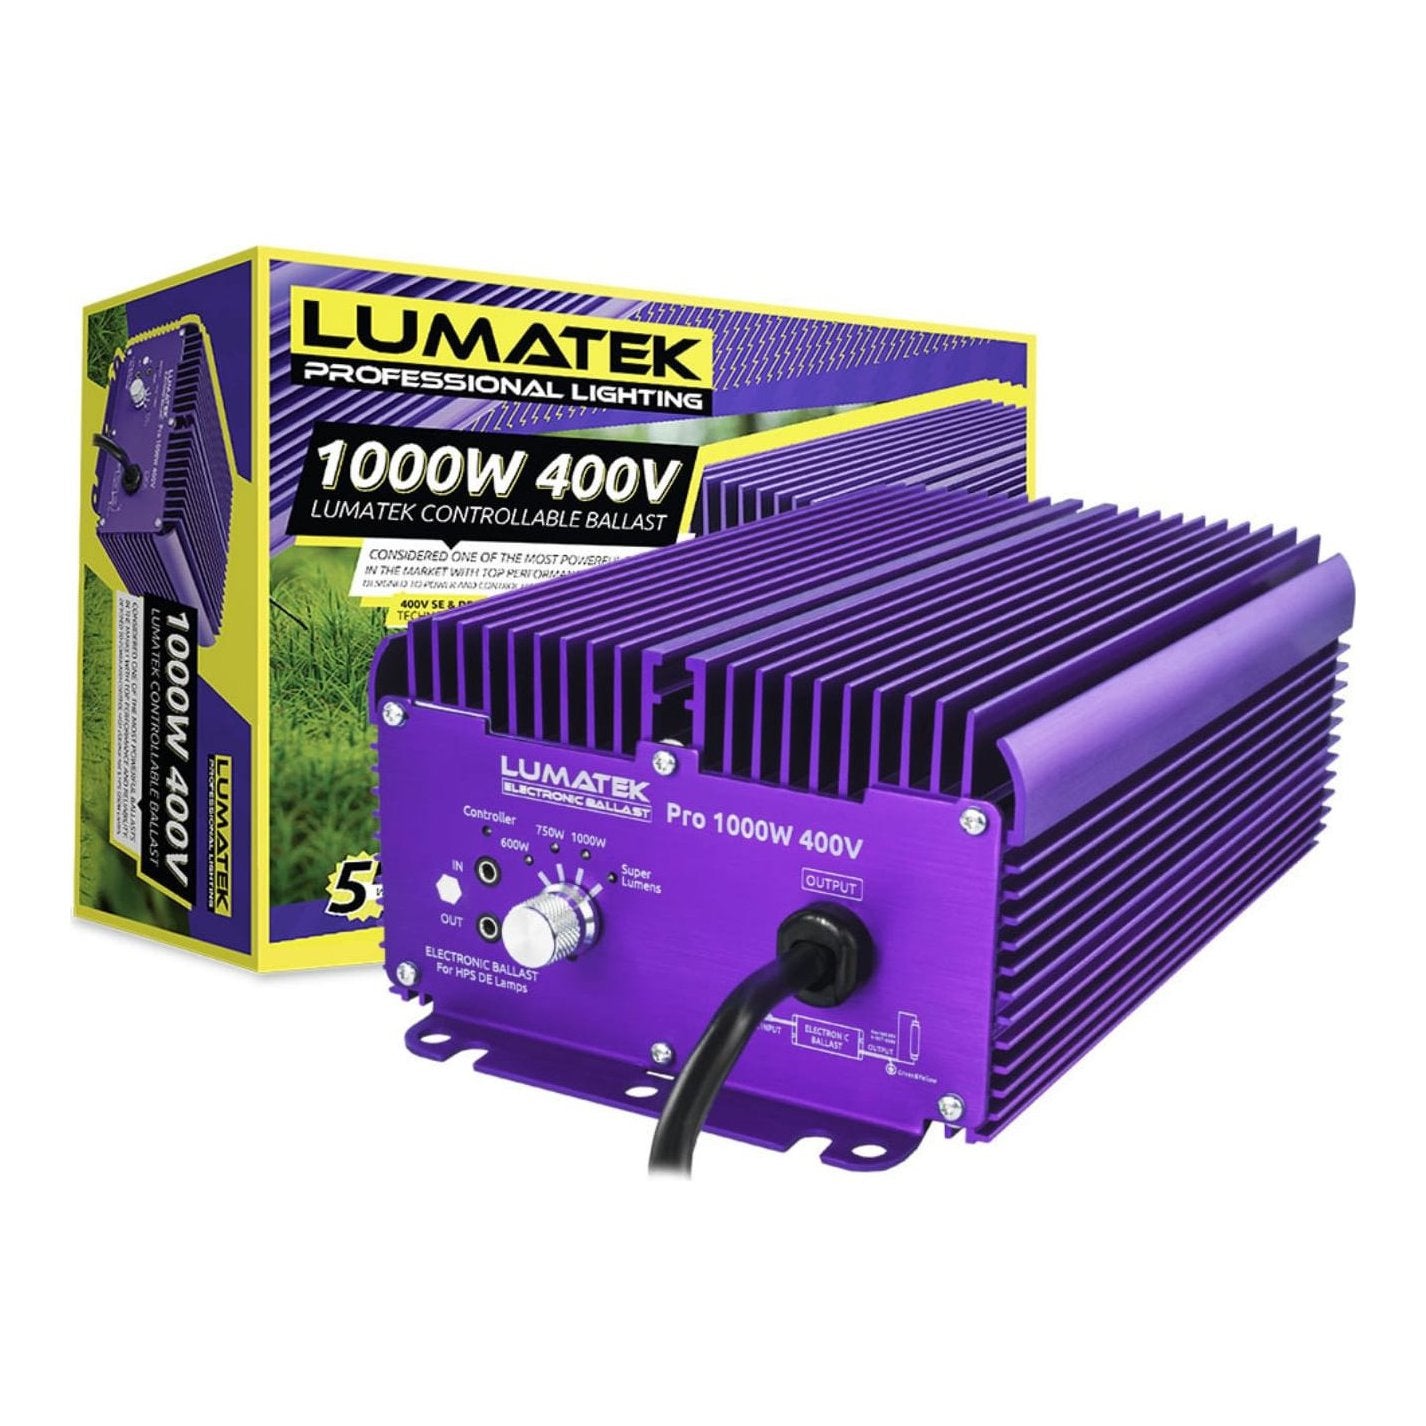 LUMATEK Pro 1000W 400V CONTROLLABLE BALLAST